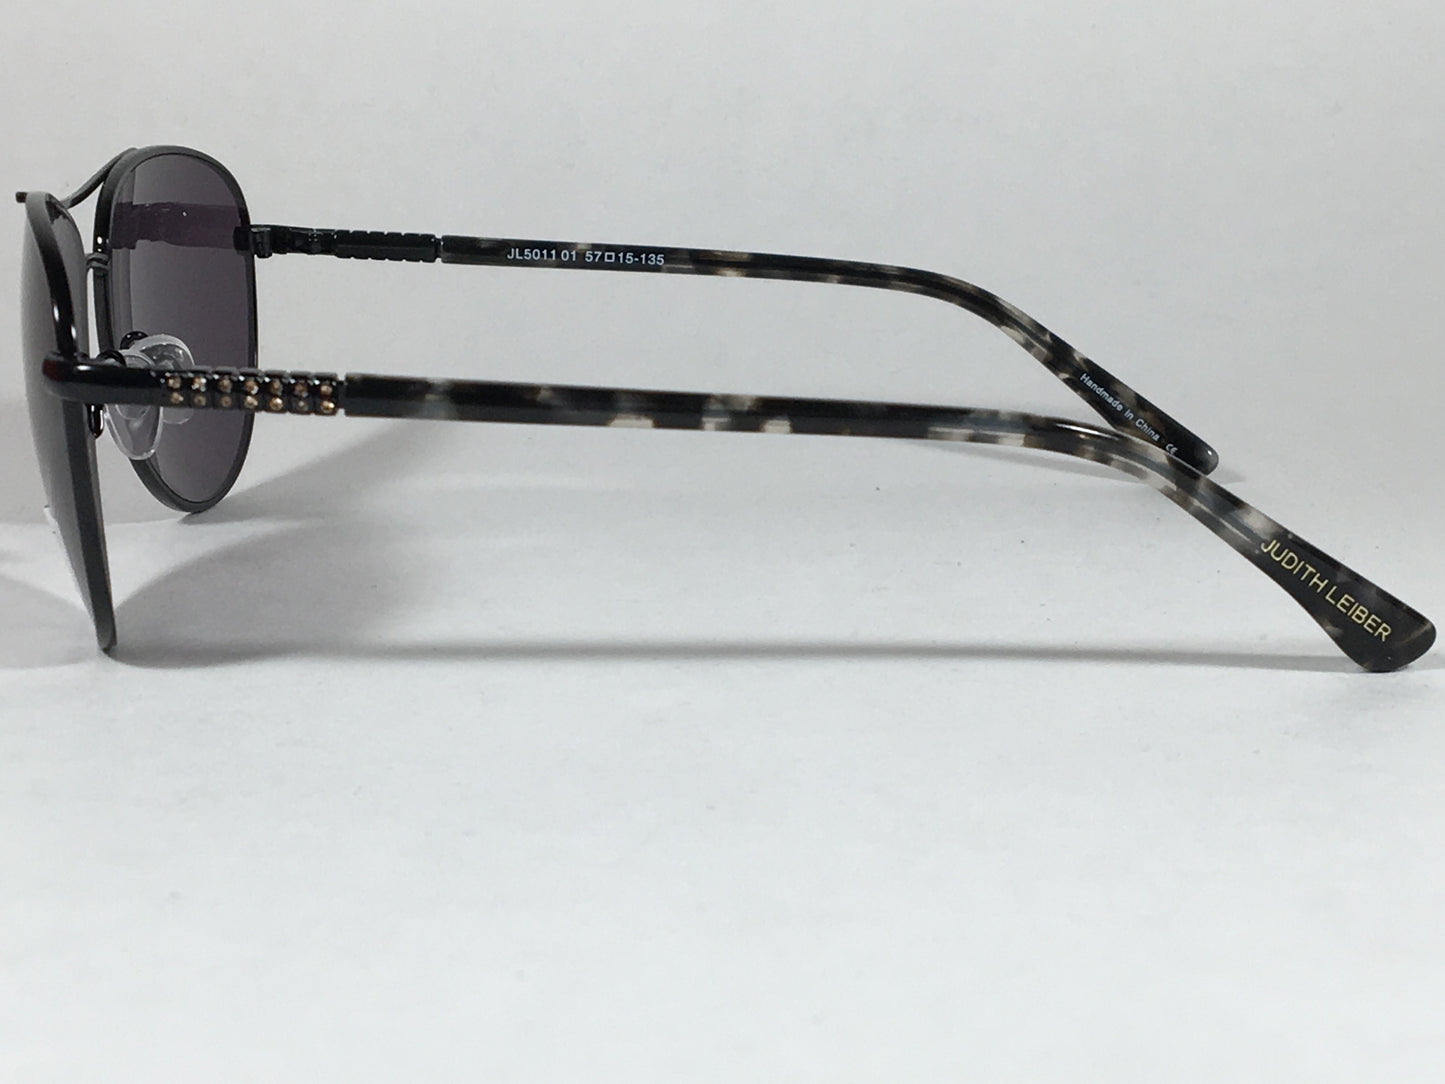 Judith Leiber Handmade Aviator Pilot Sunglasses Black Marble Gray Jl5011 01 - Sunglasses